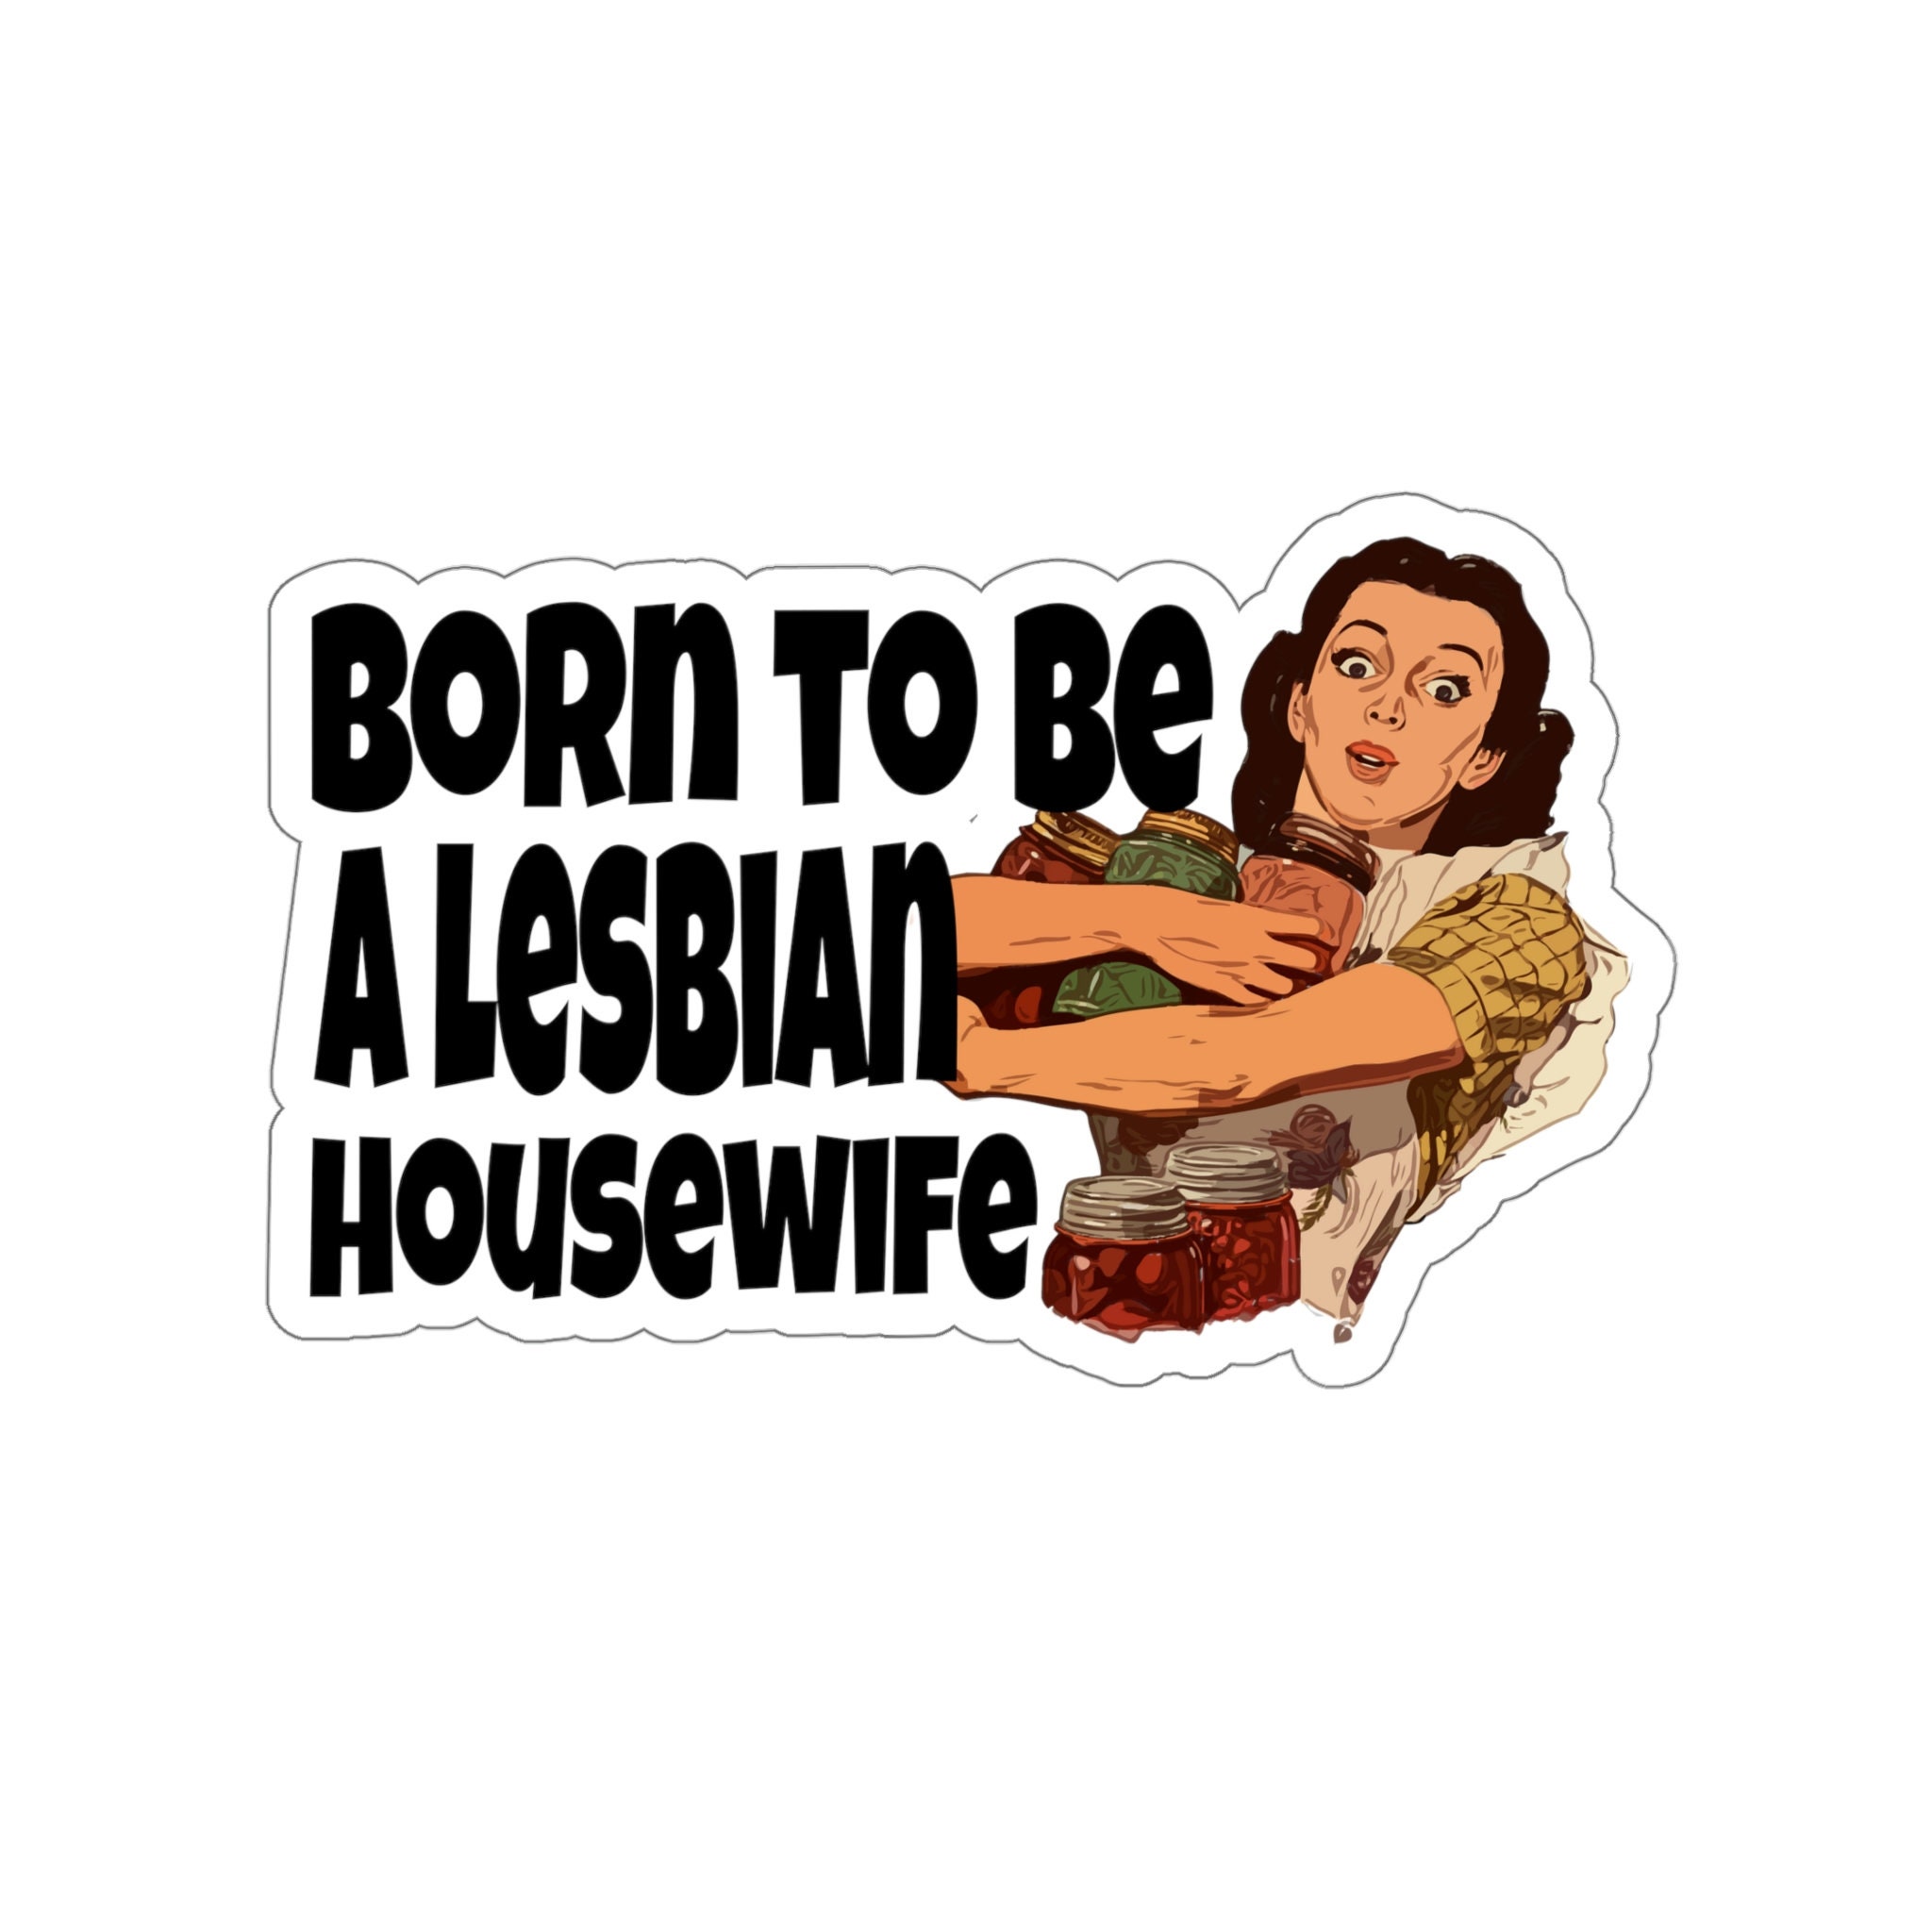 lesbian housewife books rm bali Sex Images Hq